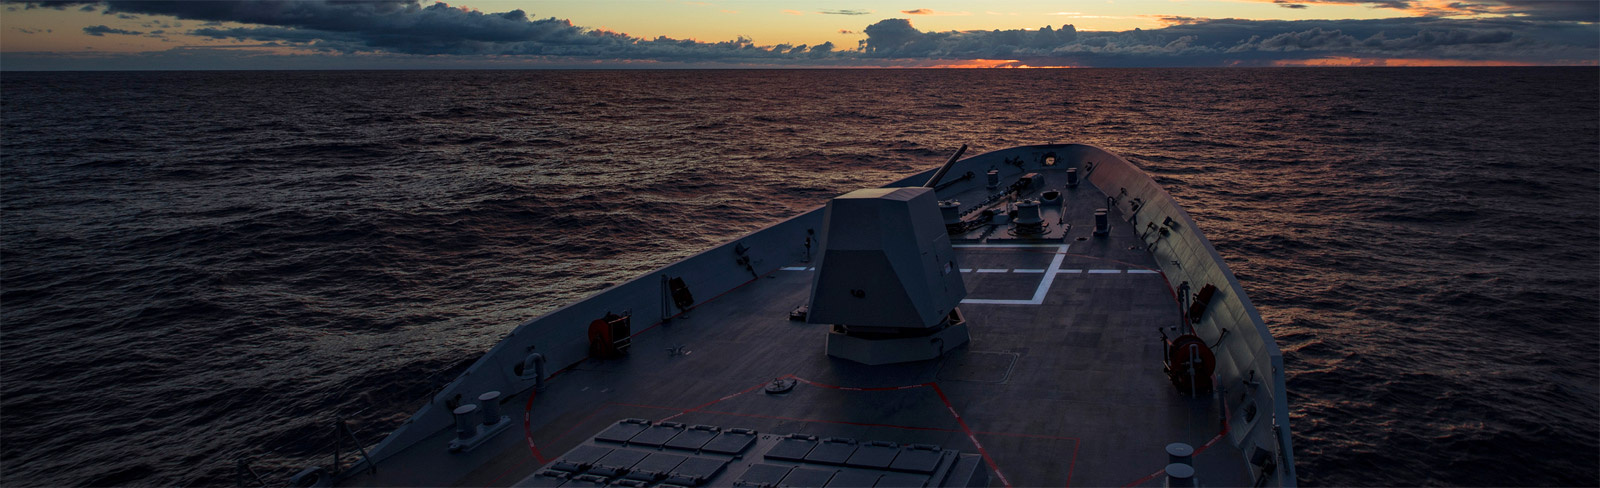 Australia's sovereign naval capability